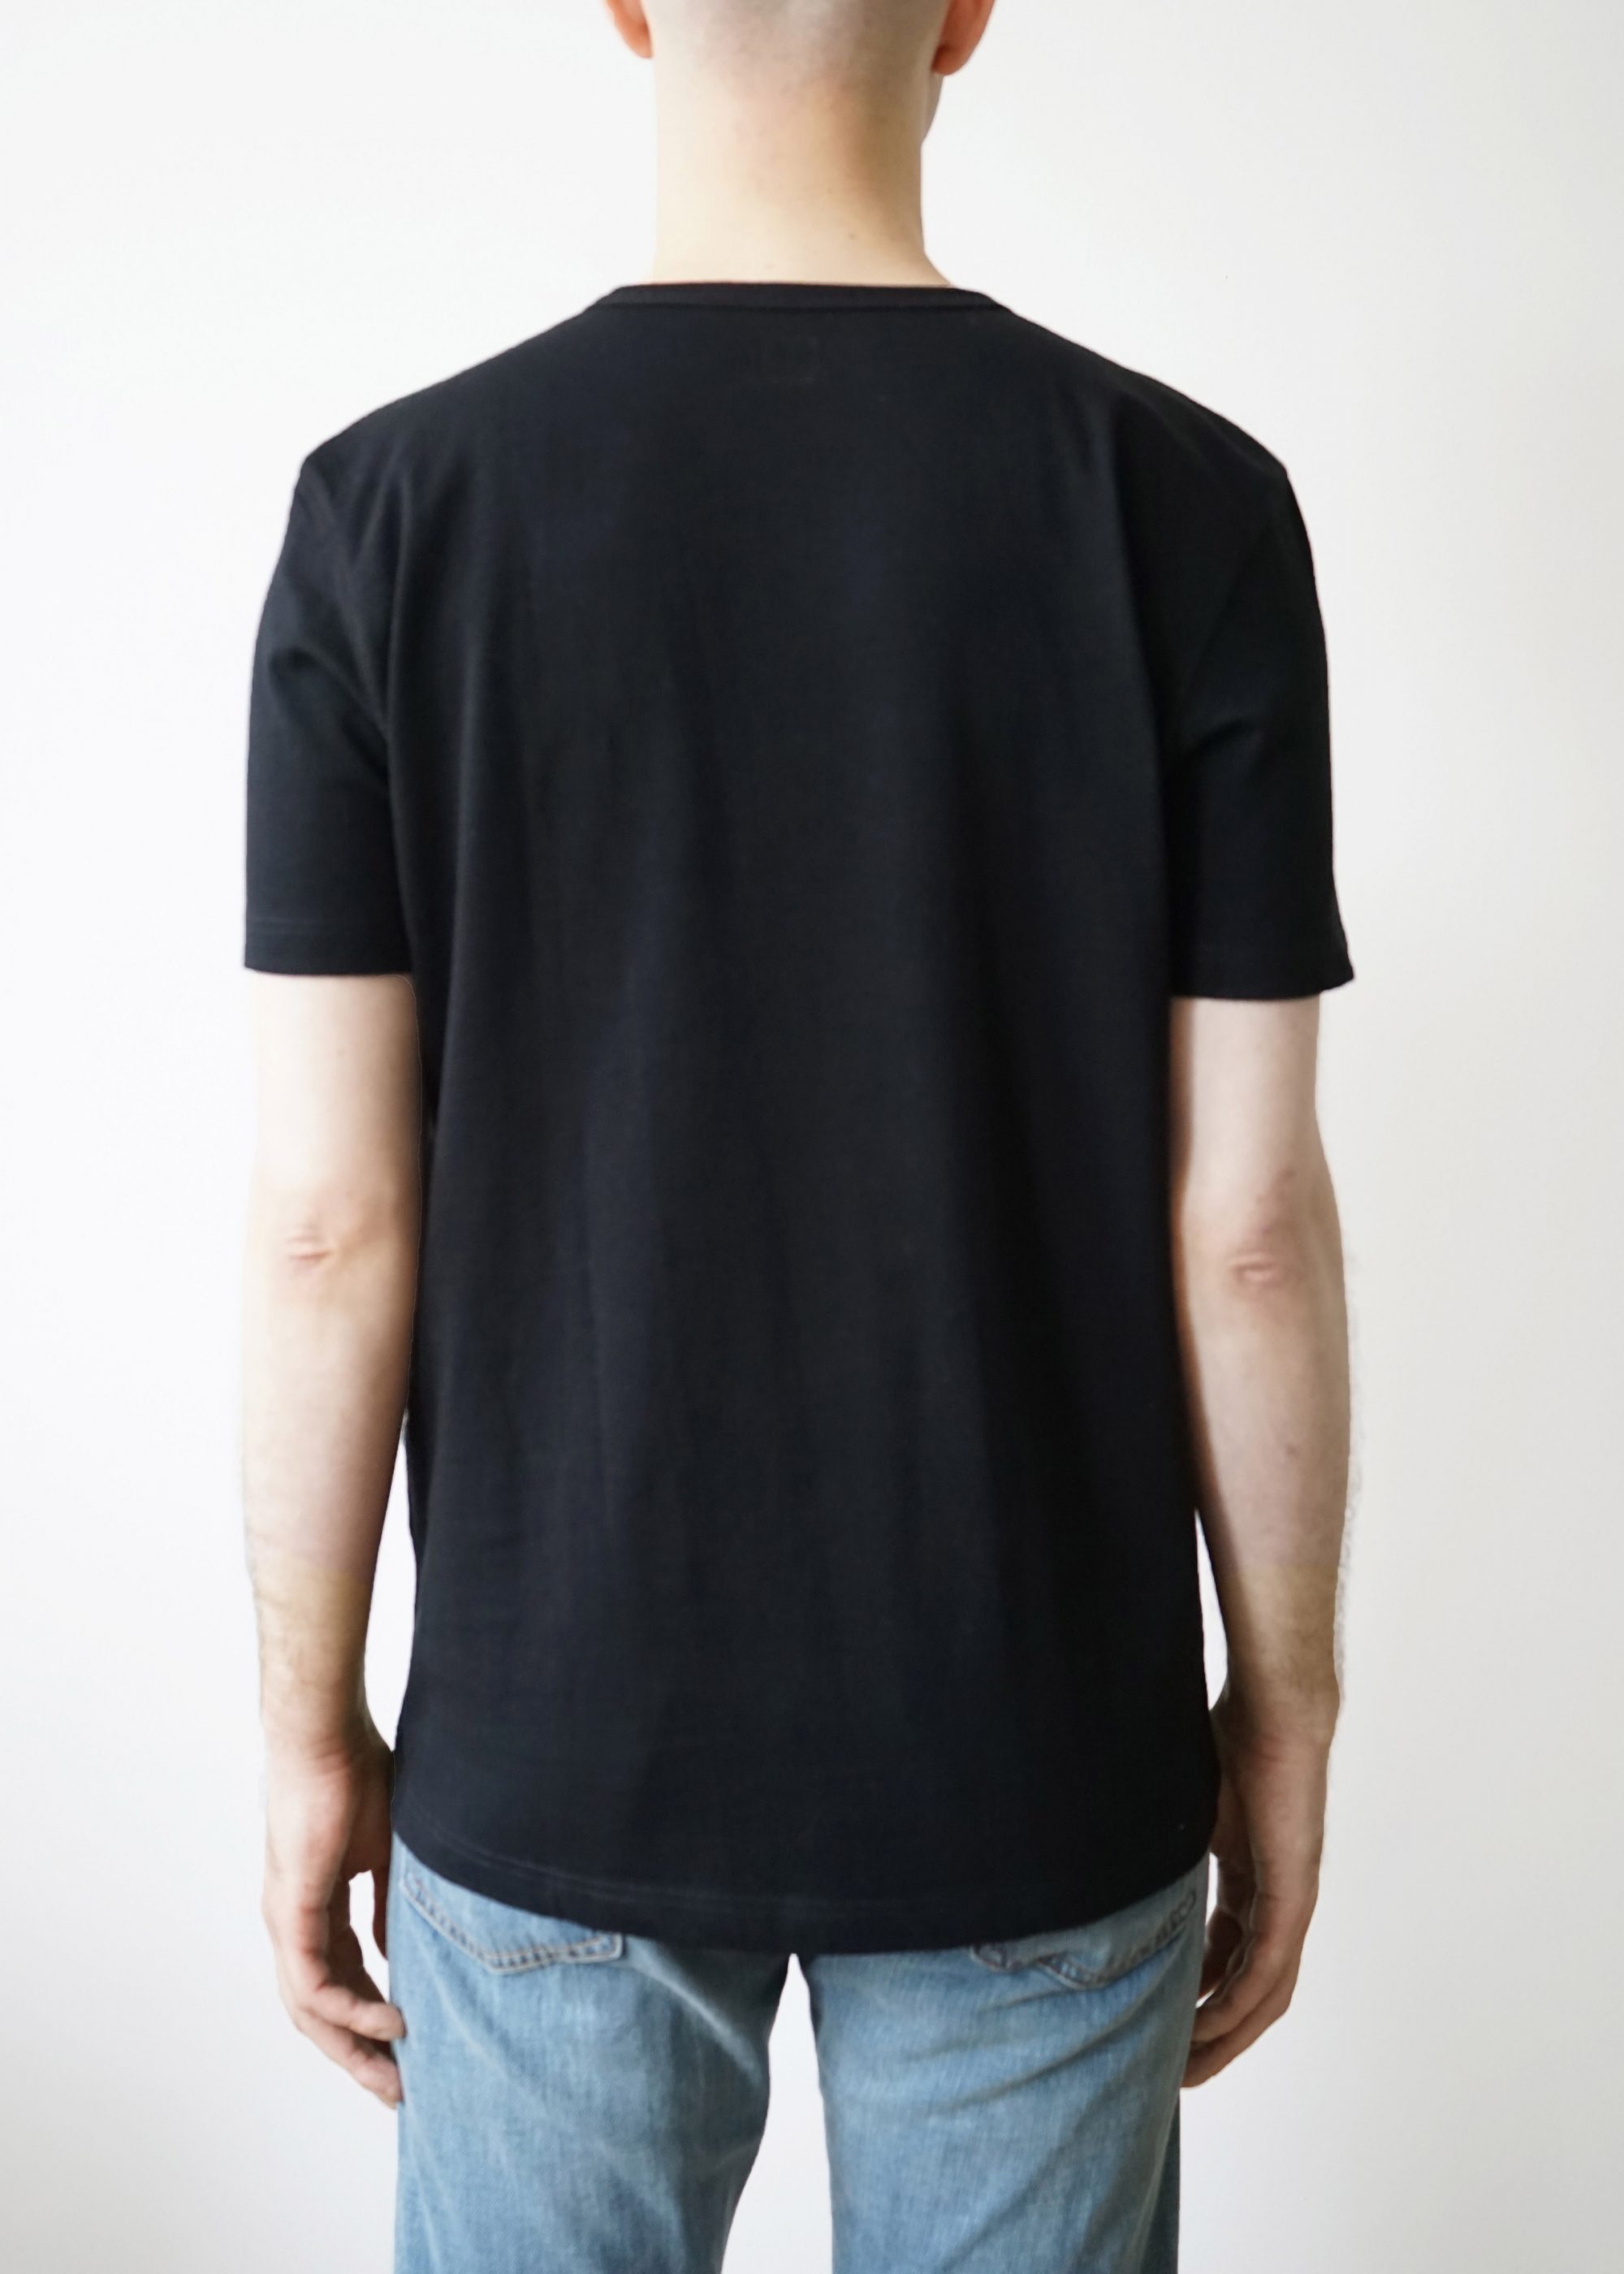 Product image for »Chet« Black Ringer T-Shirt 100% Organic Cotton